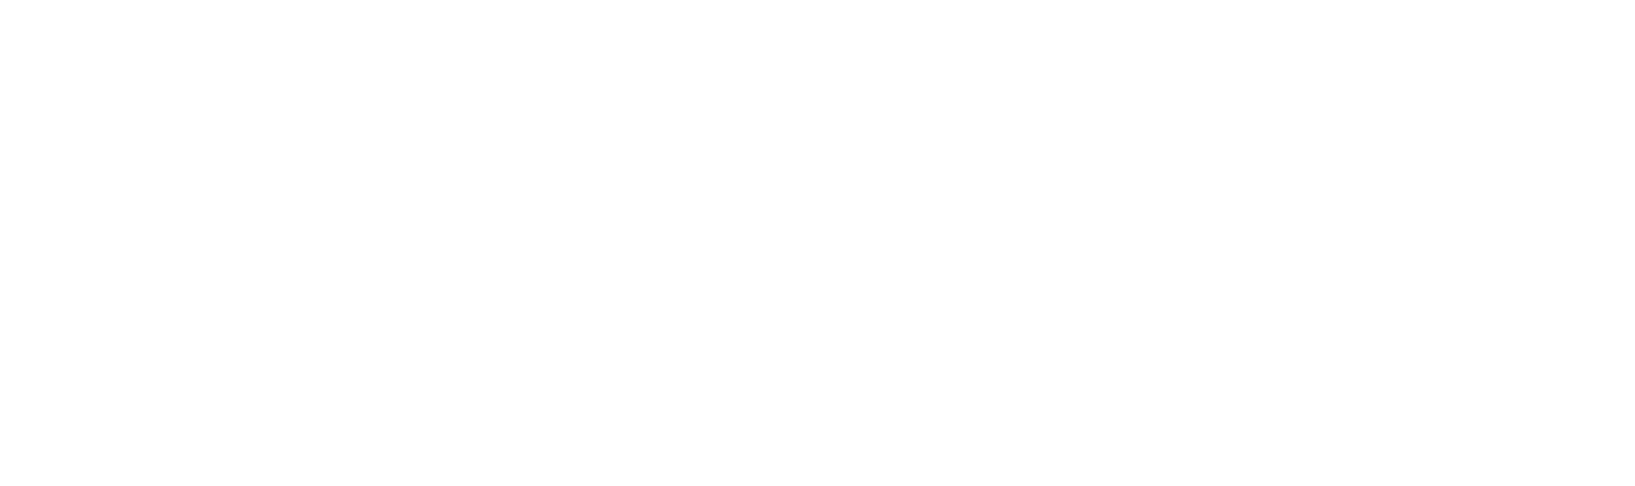 Tappezzeria Belfiore